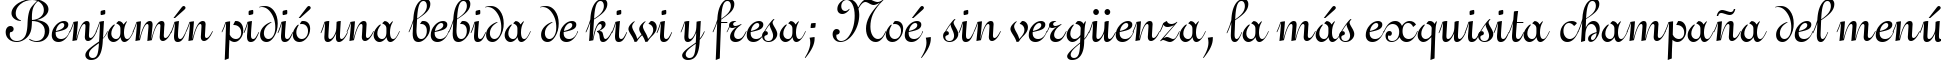 Пример написания шрифтом French 111 BT текста на испанском